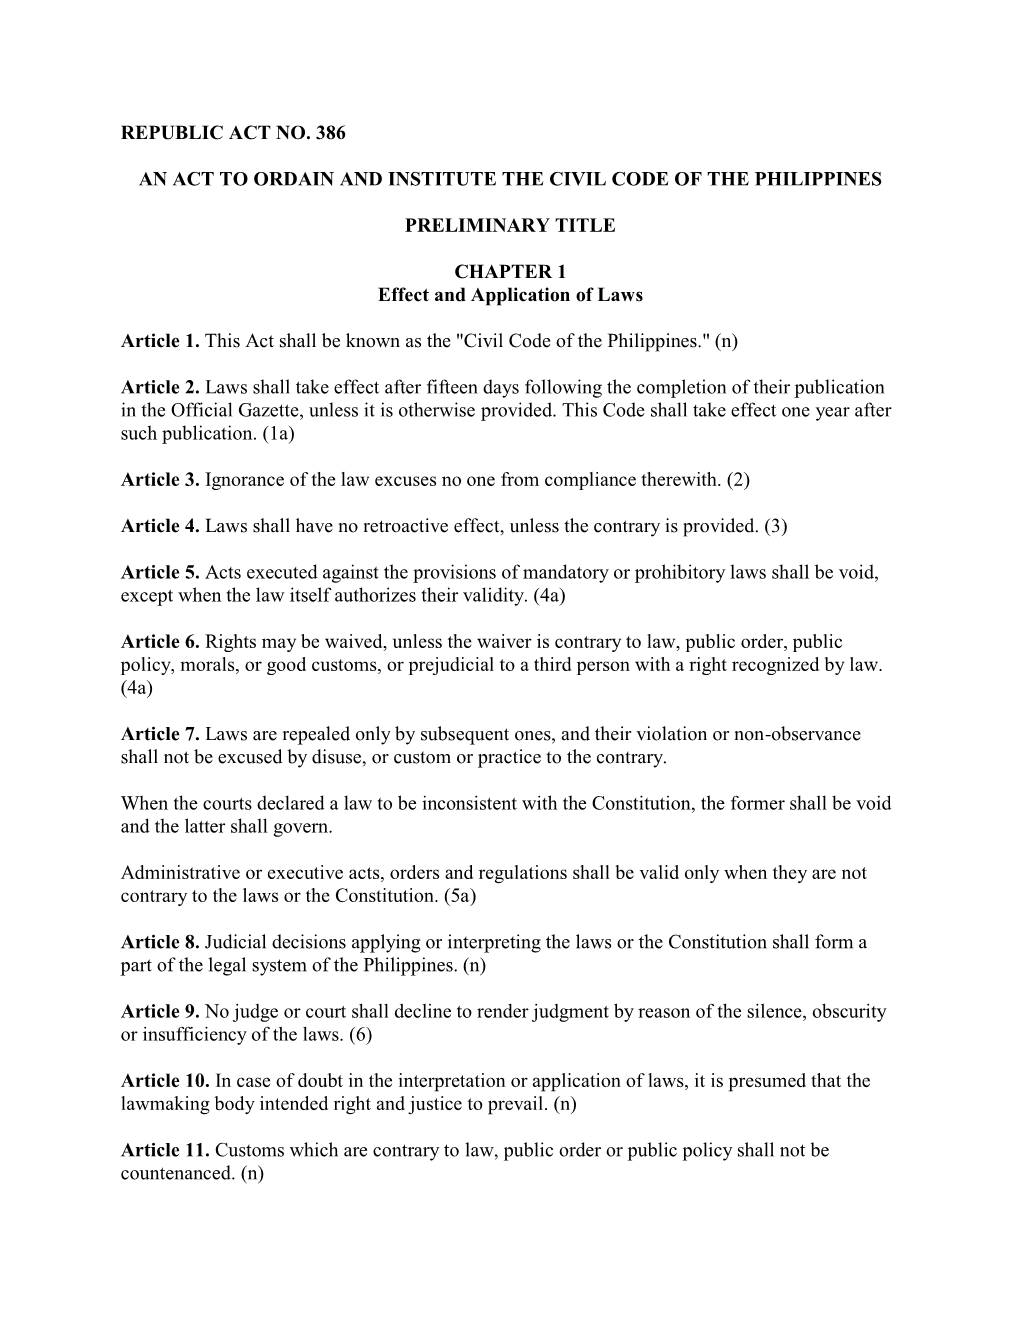 Civil Code of the Philippines